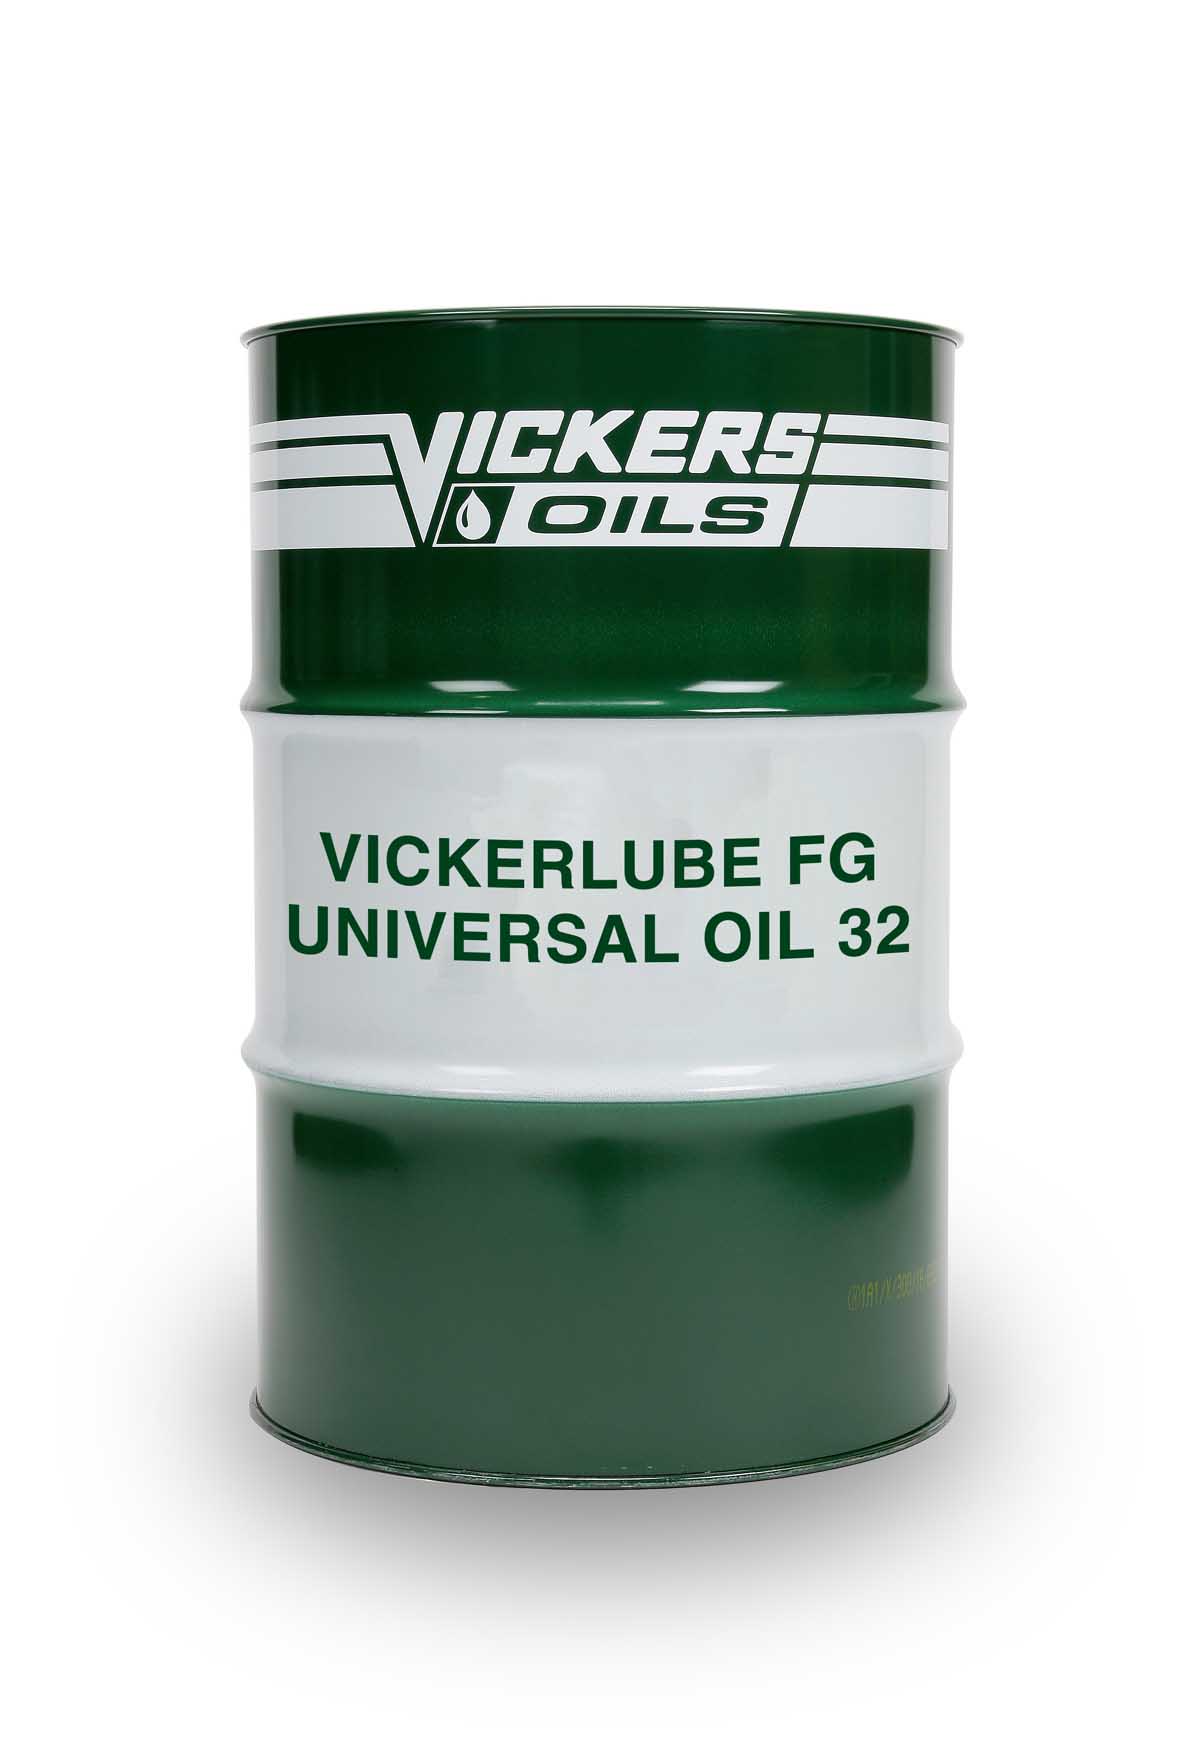 https://vickers-oil.com/wp-content/uploads/2020/11/VICKERLUBE_FG_UNIVERSAL_OIL_32.jpg